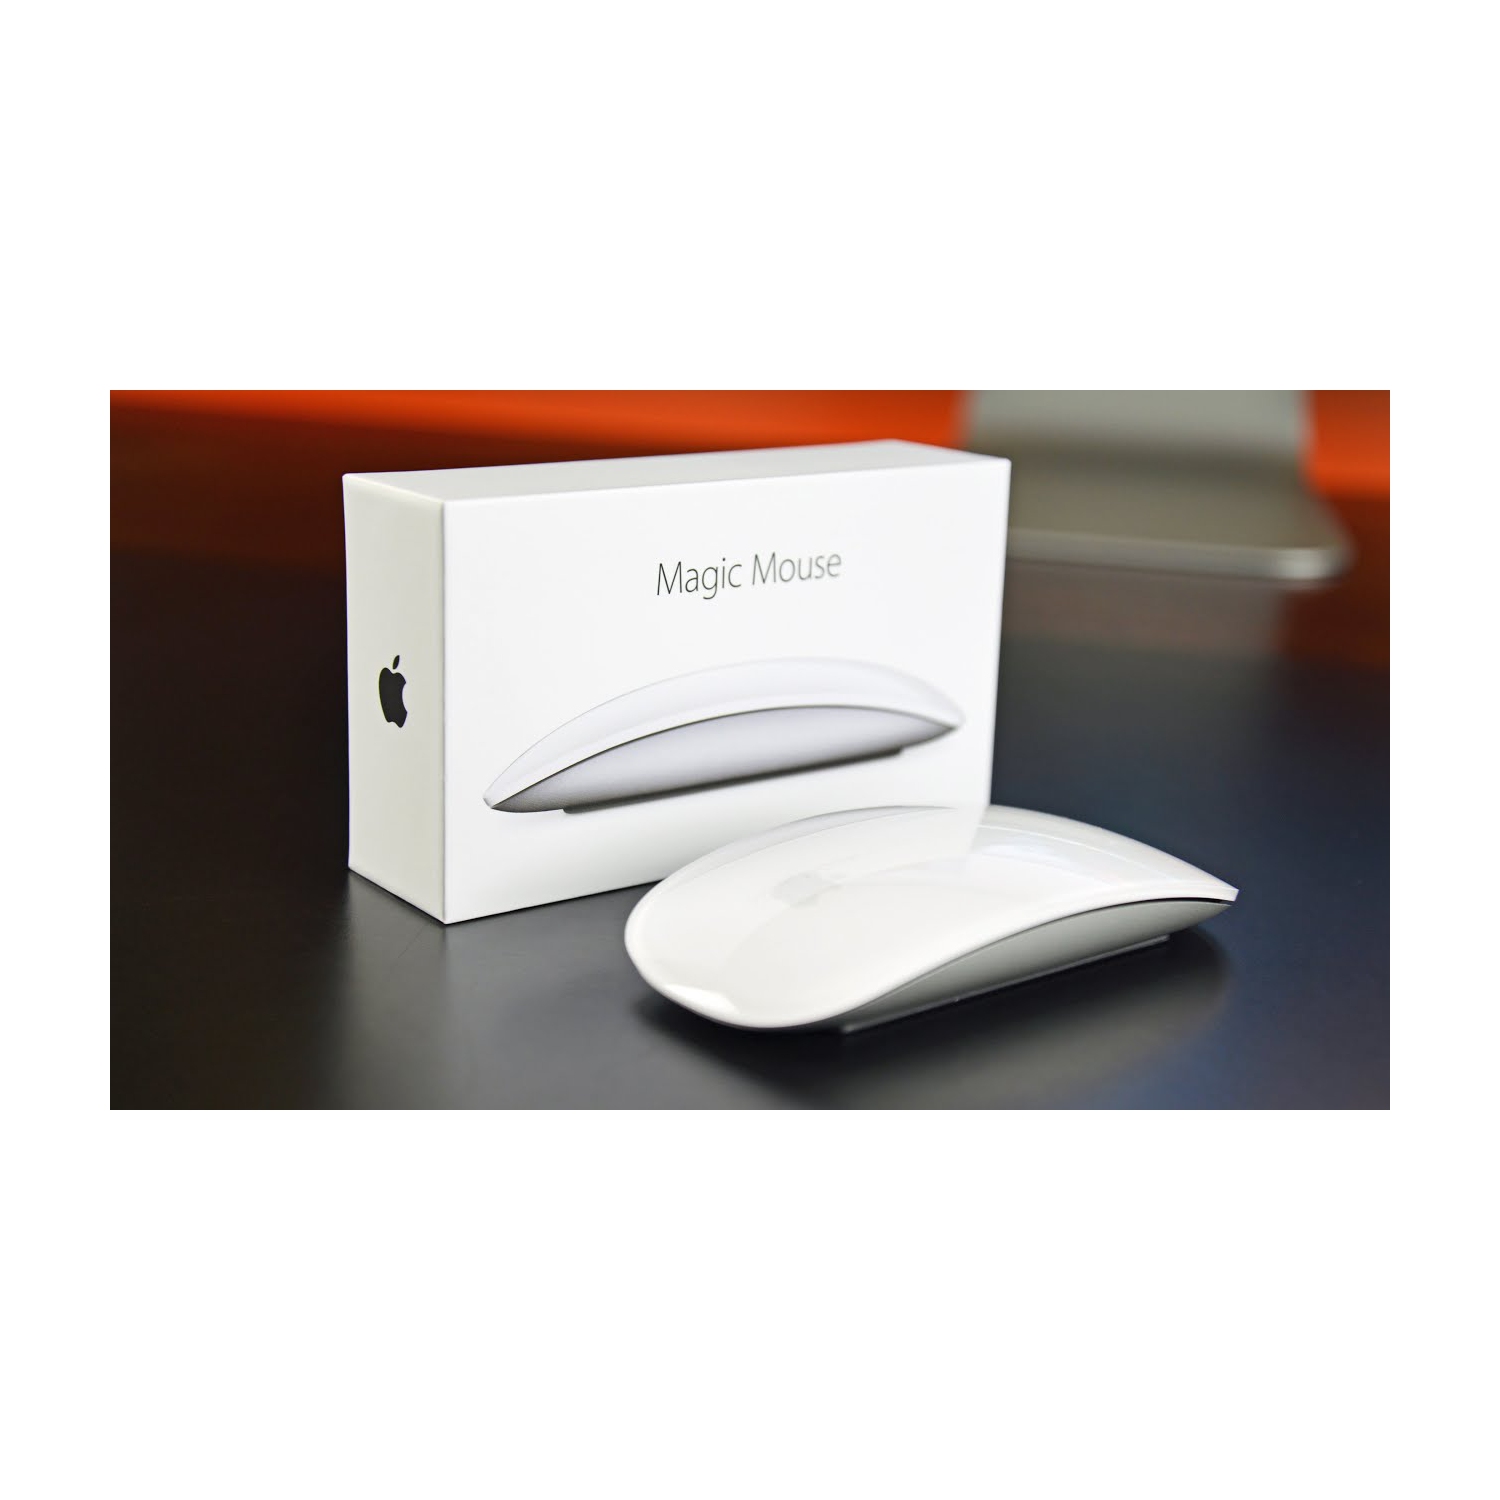 Apple Magic Mouse 2 (MLA02LL/A) - White - New Sealed Box